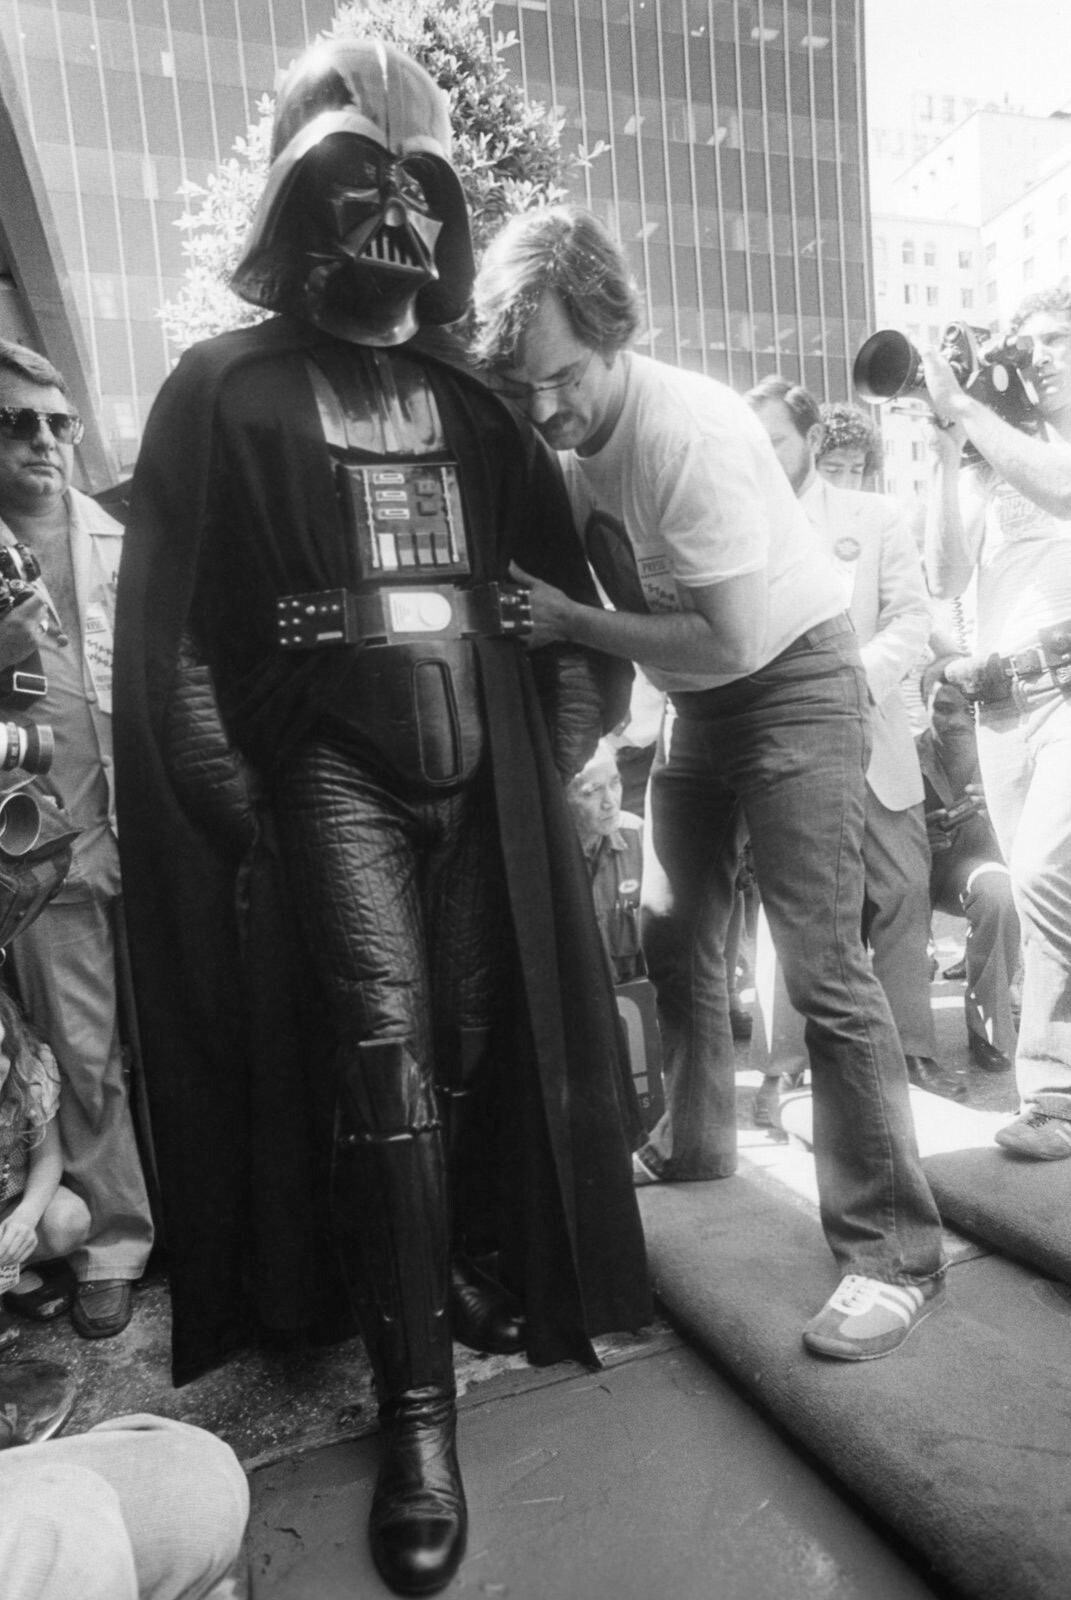 Charley Lippincott and Darth Vader